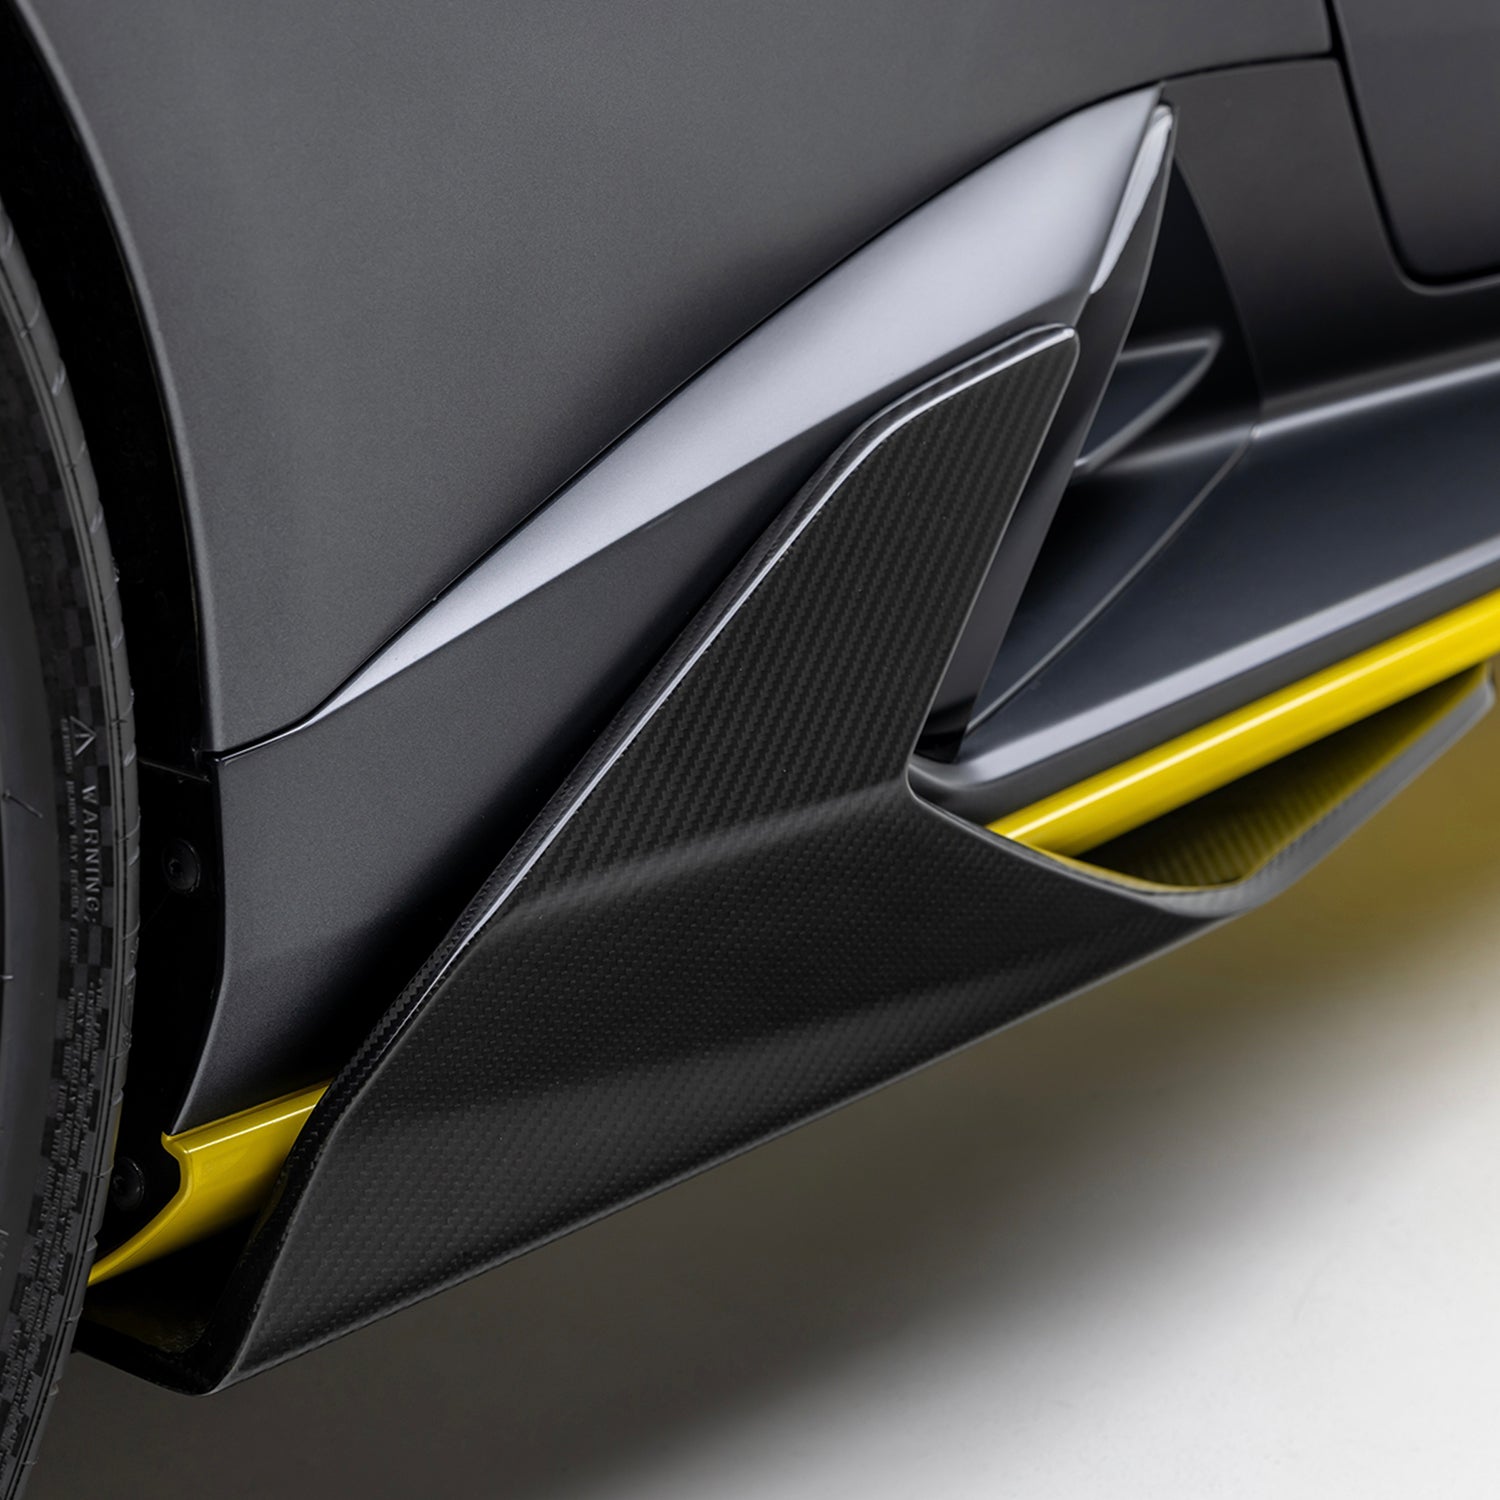 Huracan STO Side Rocker Carbon Fiber - Vorsteiner Wheels  - Aero - [tags]